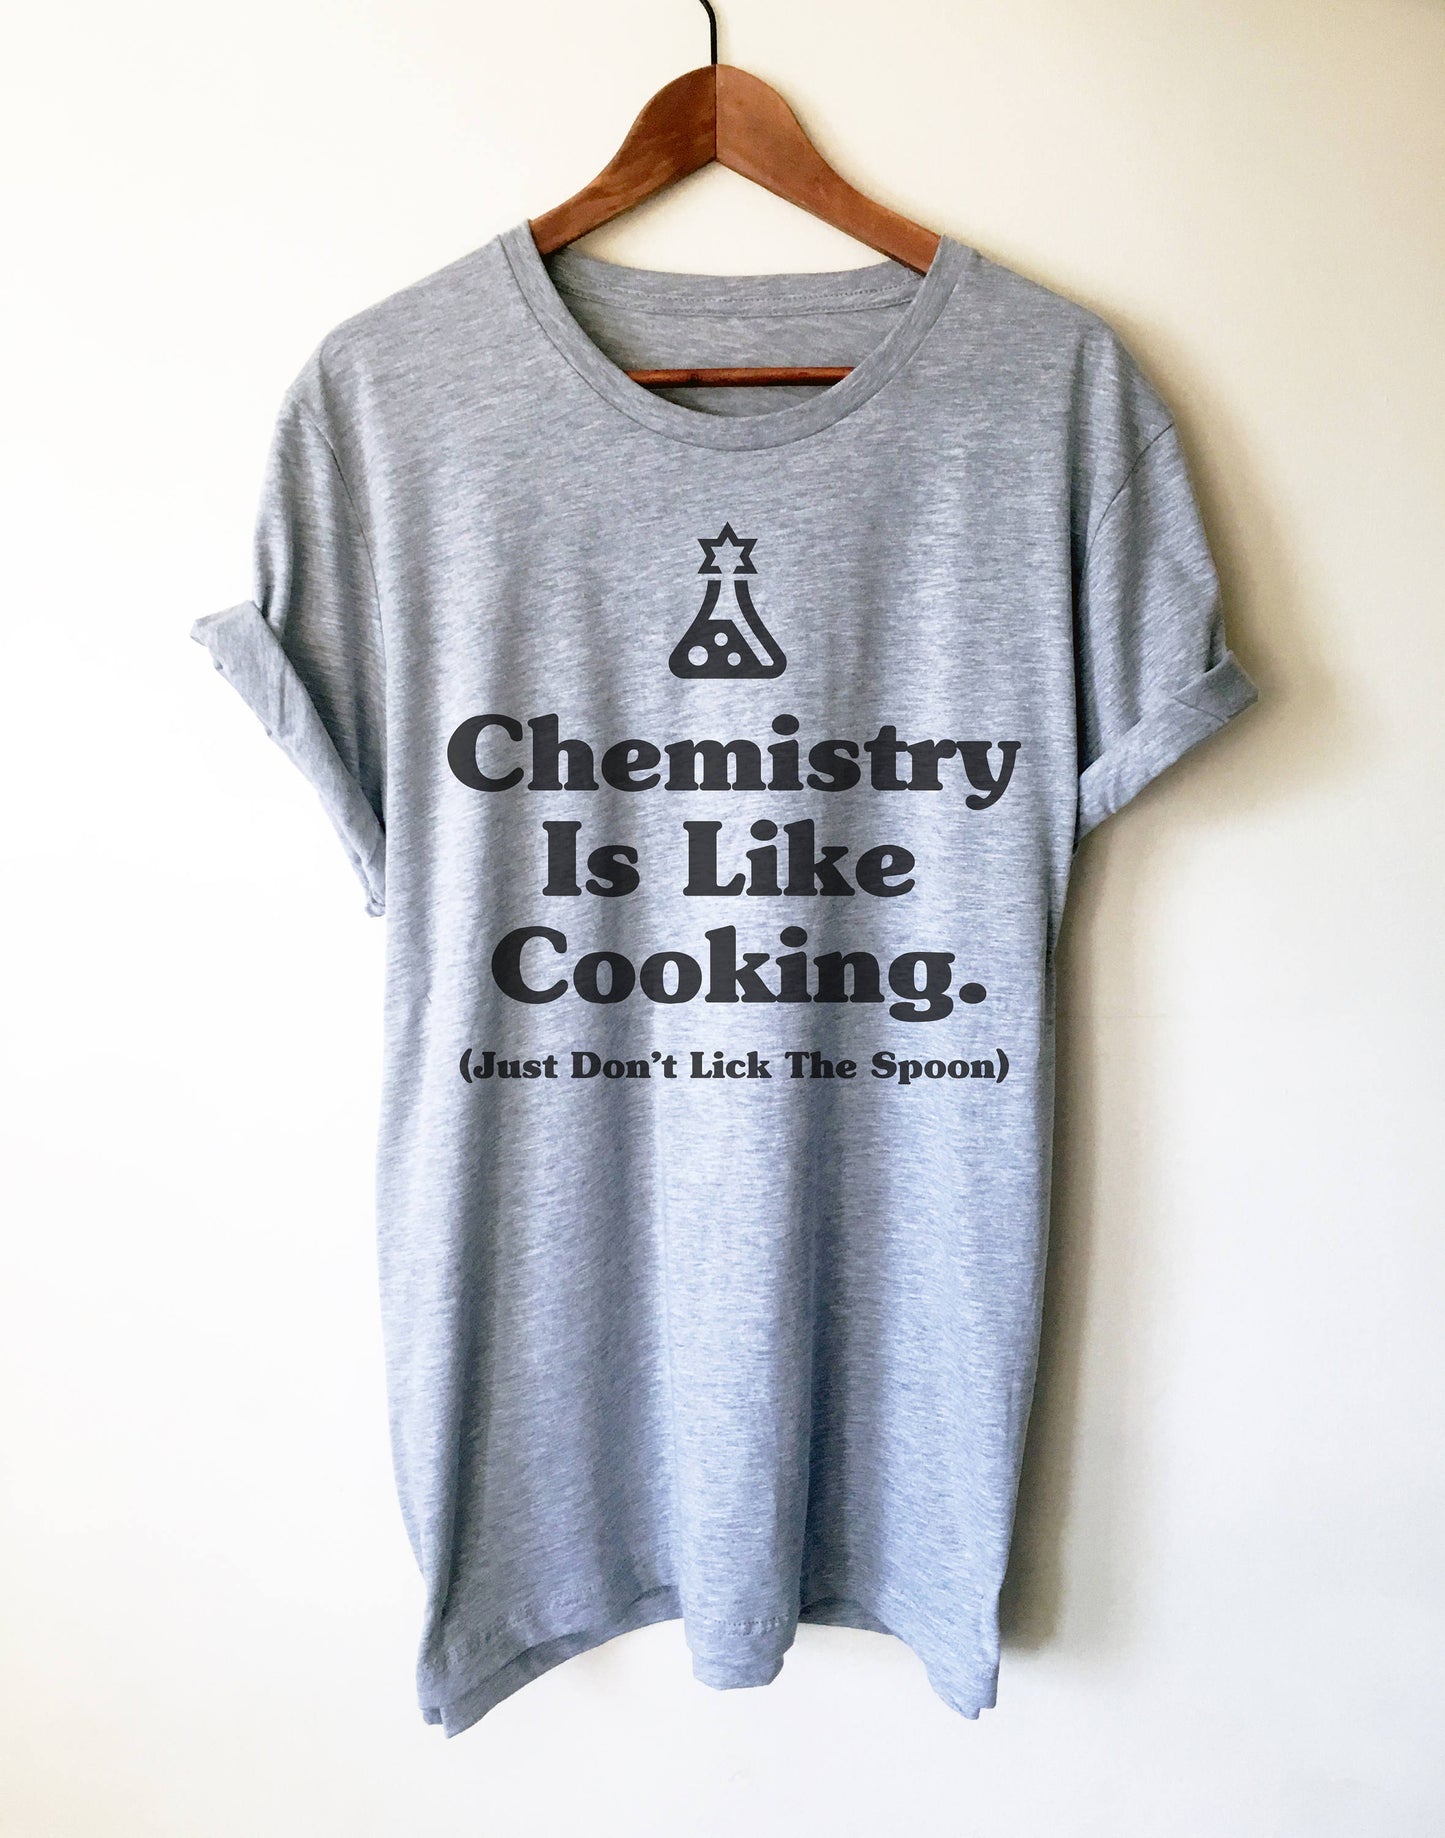 Chemistry Is Like Cooking Unisex Shirt - Chemistry Shirt, Science Shirt, Chemistry Gift, Chemistry Teacher, Chemist Gift, Chemist Shirt